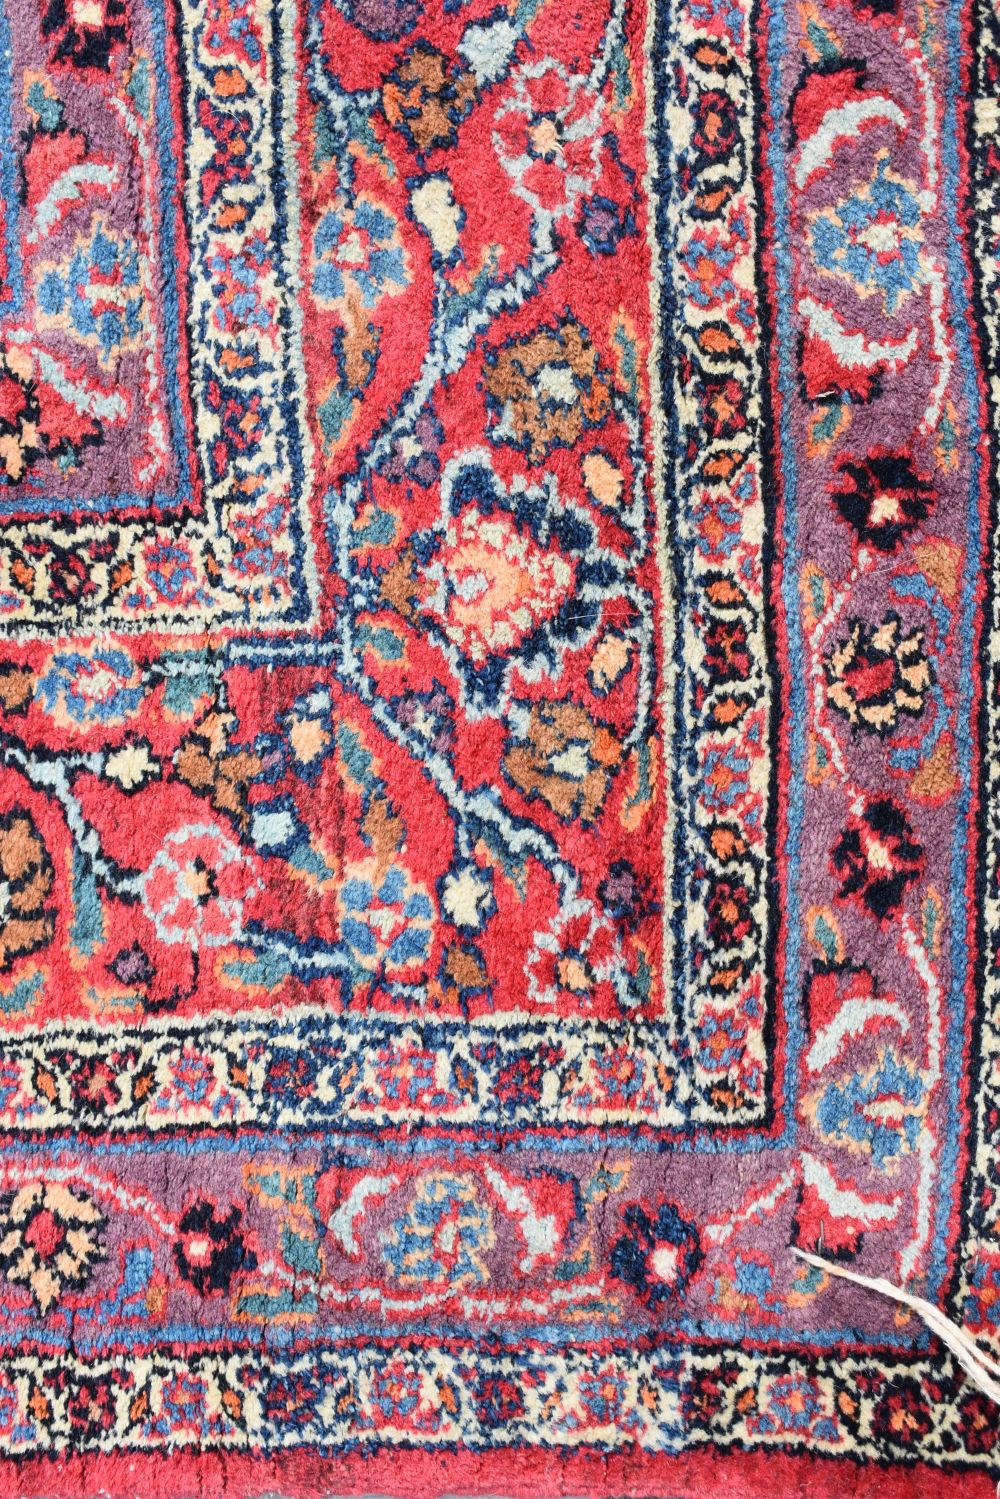 A Persian Khorasan rug 328 x 228 cm - Image 12 of 20